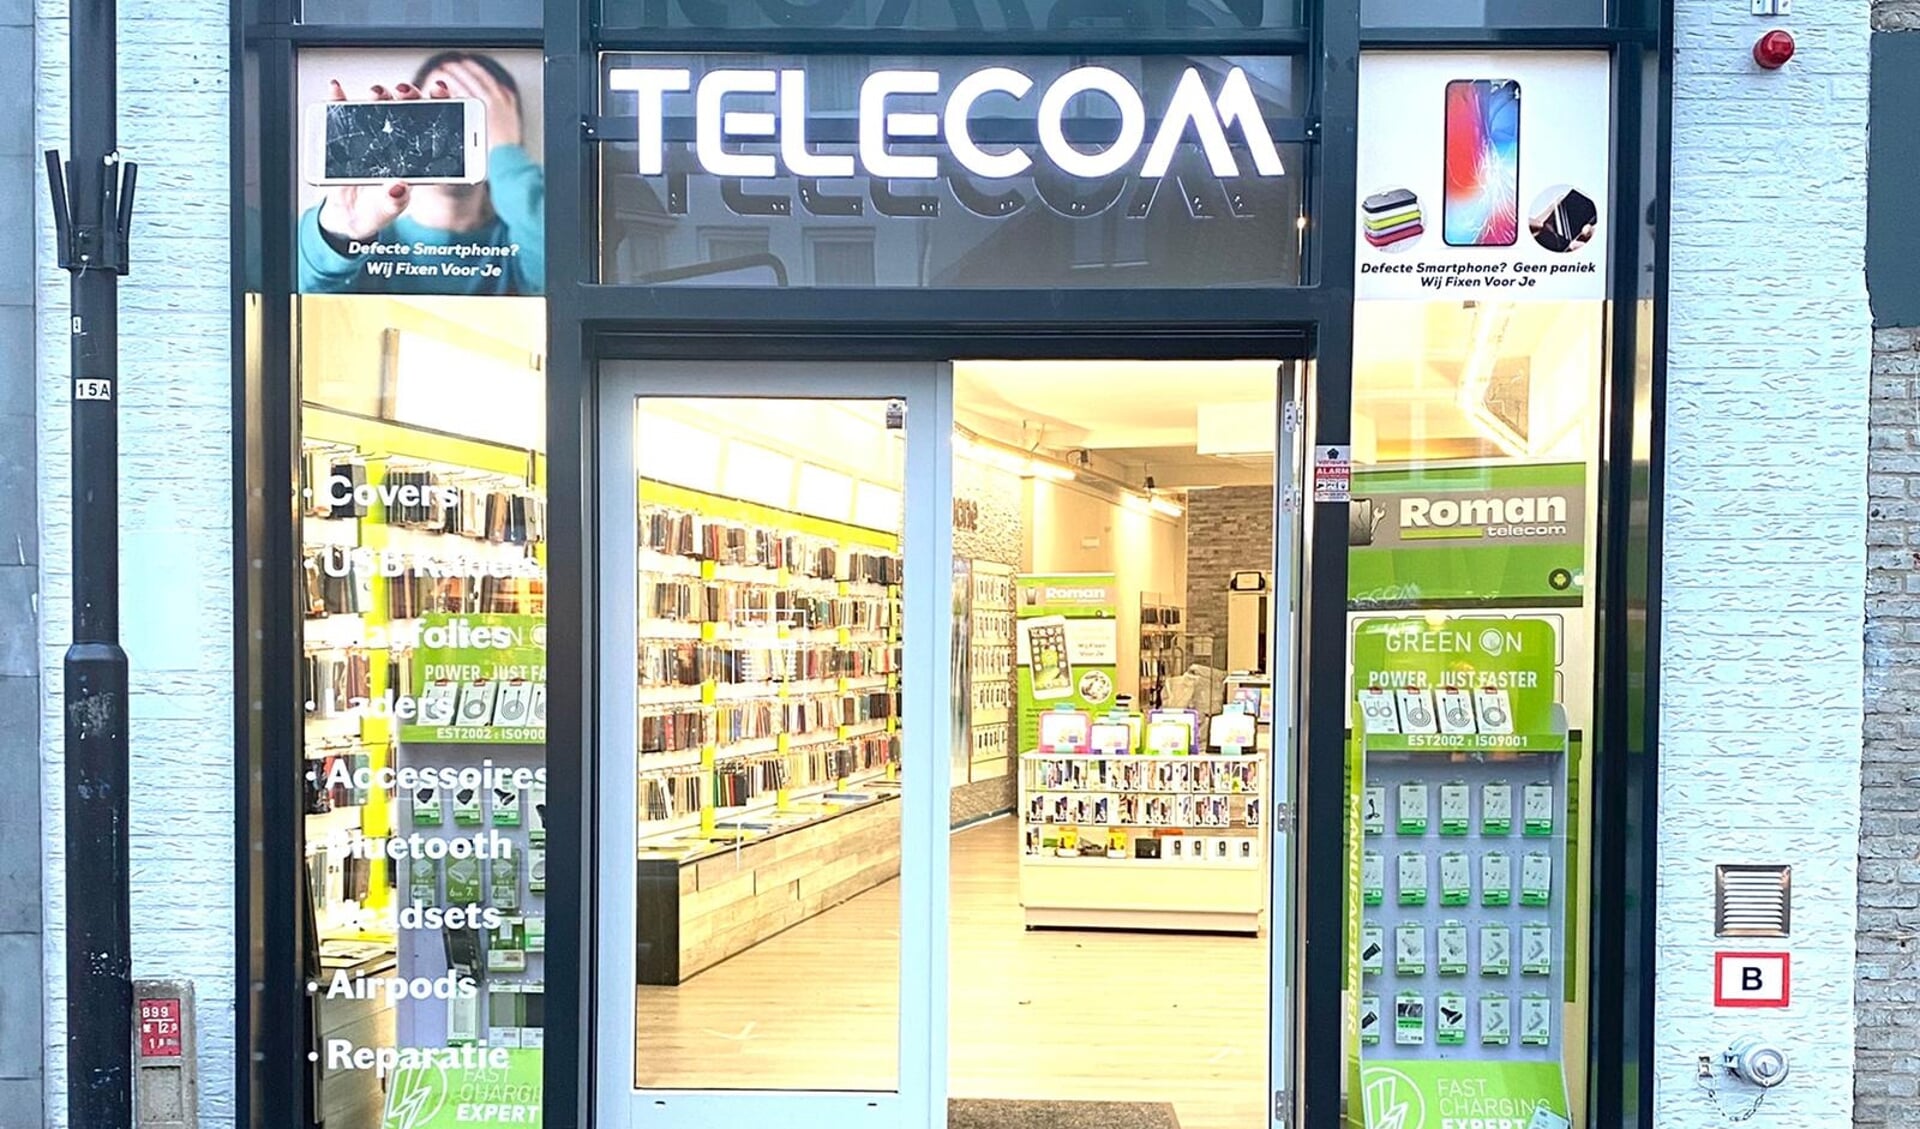 Roman Telecom.